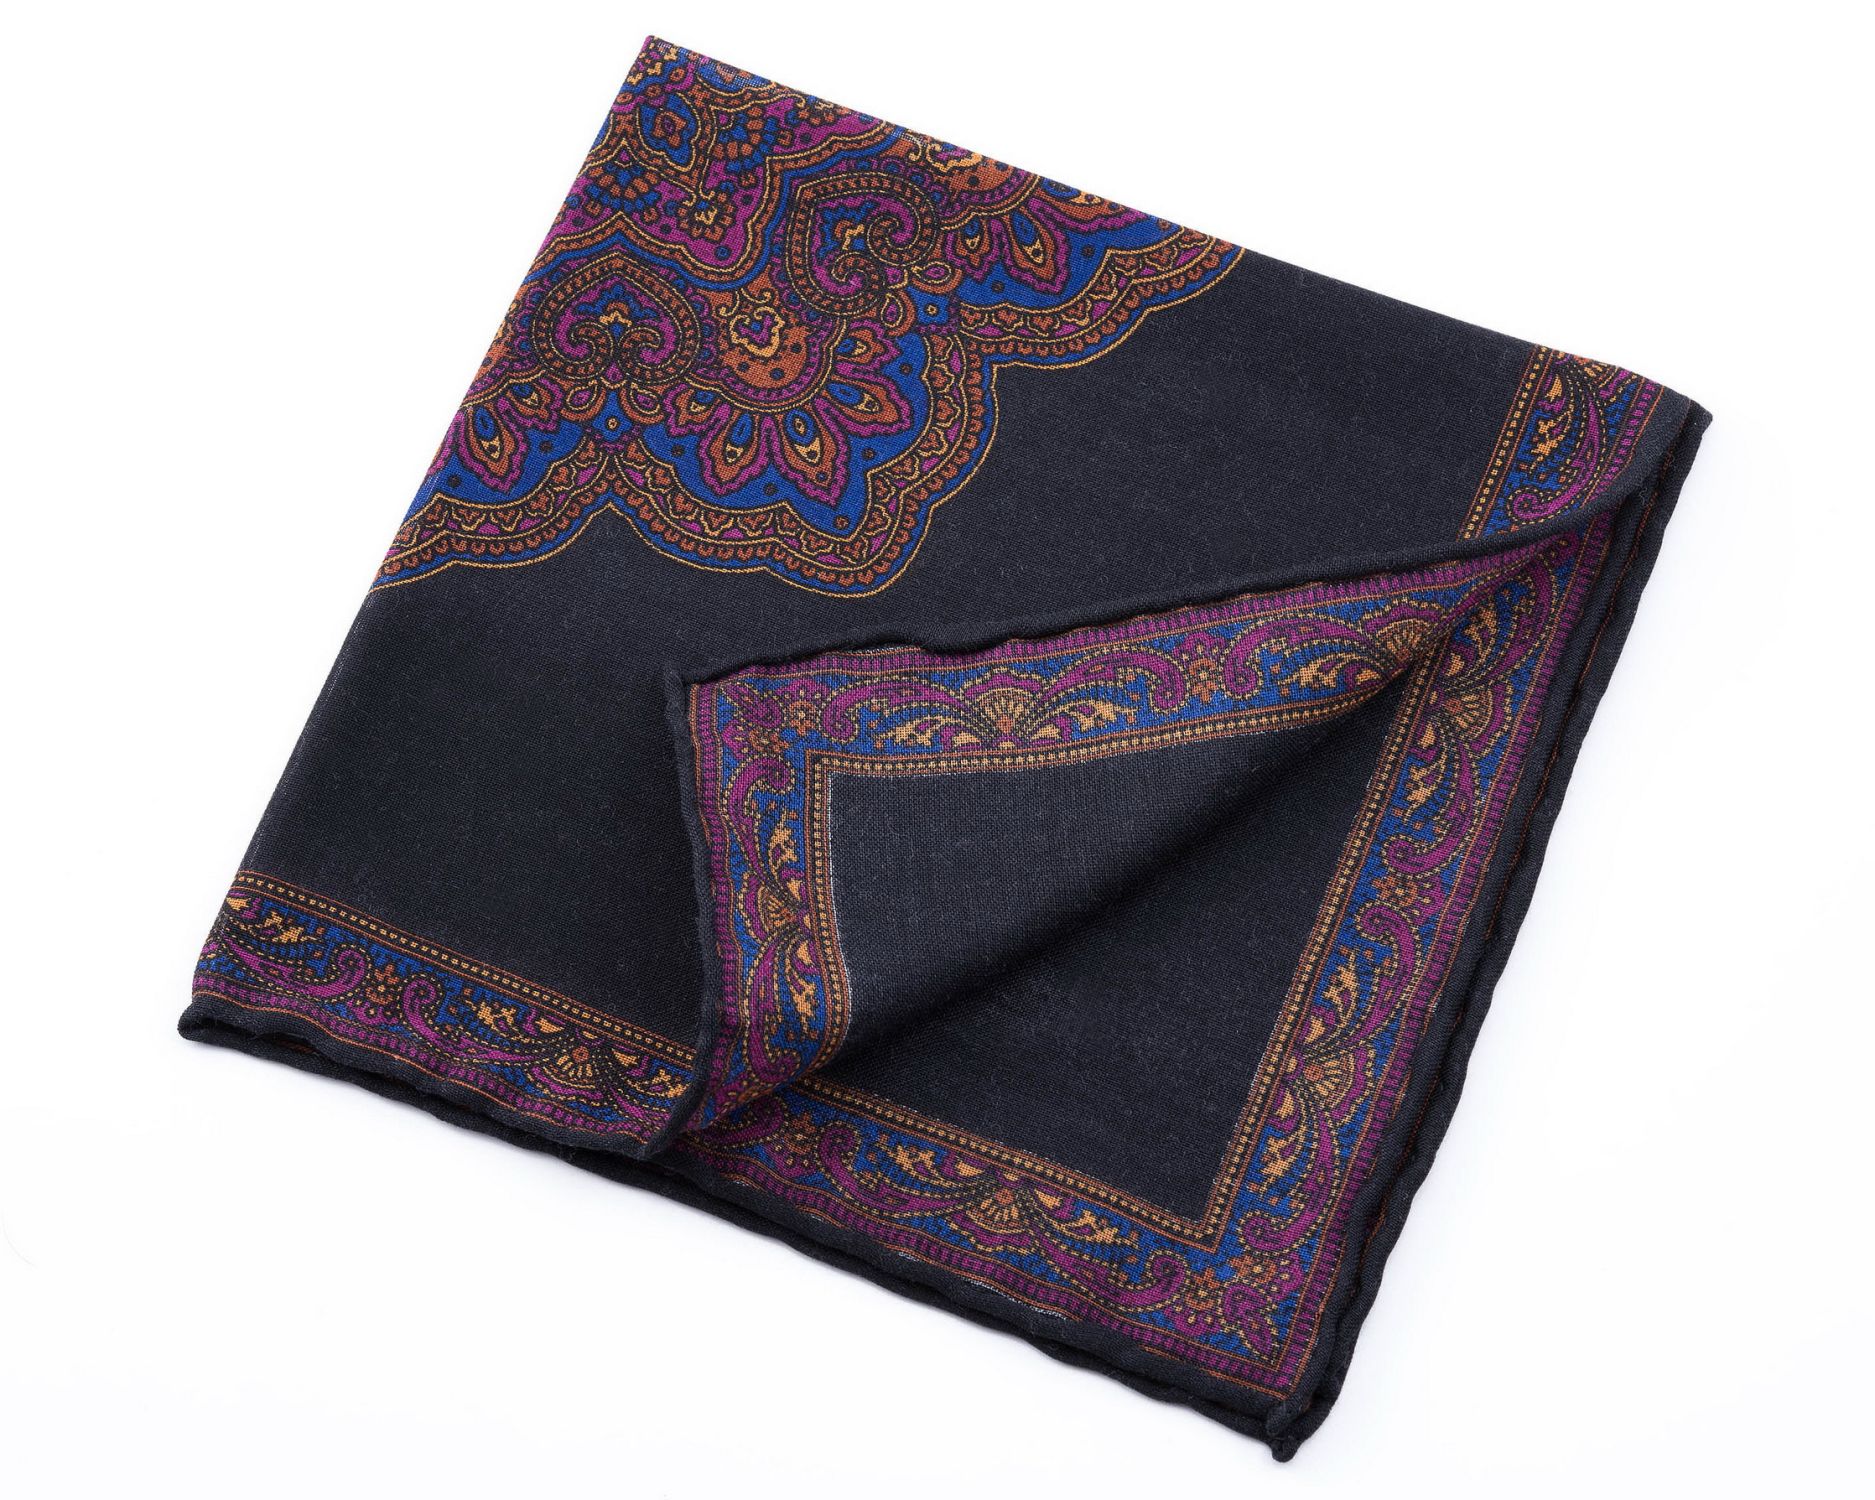 Purple & Black Silk Pocket Square Handkerchief For Top Jacket Pocket 